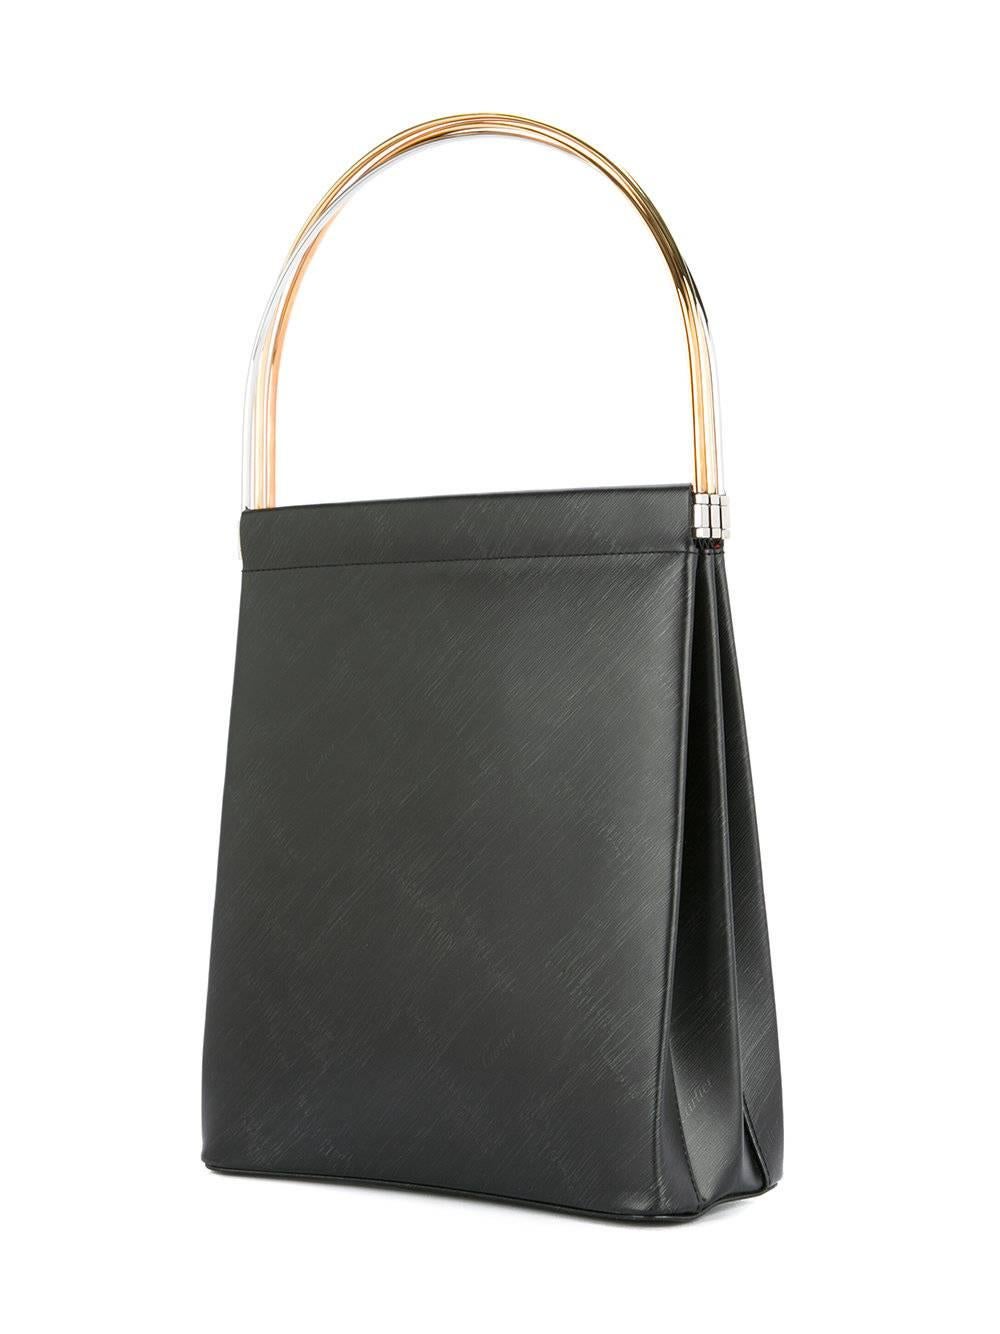 Women's Cartier Black Leather Evening Kelly Style Top Handle Satchel Bag